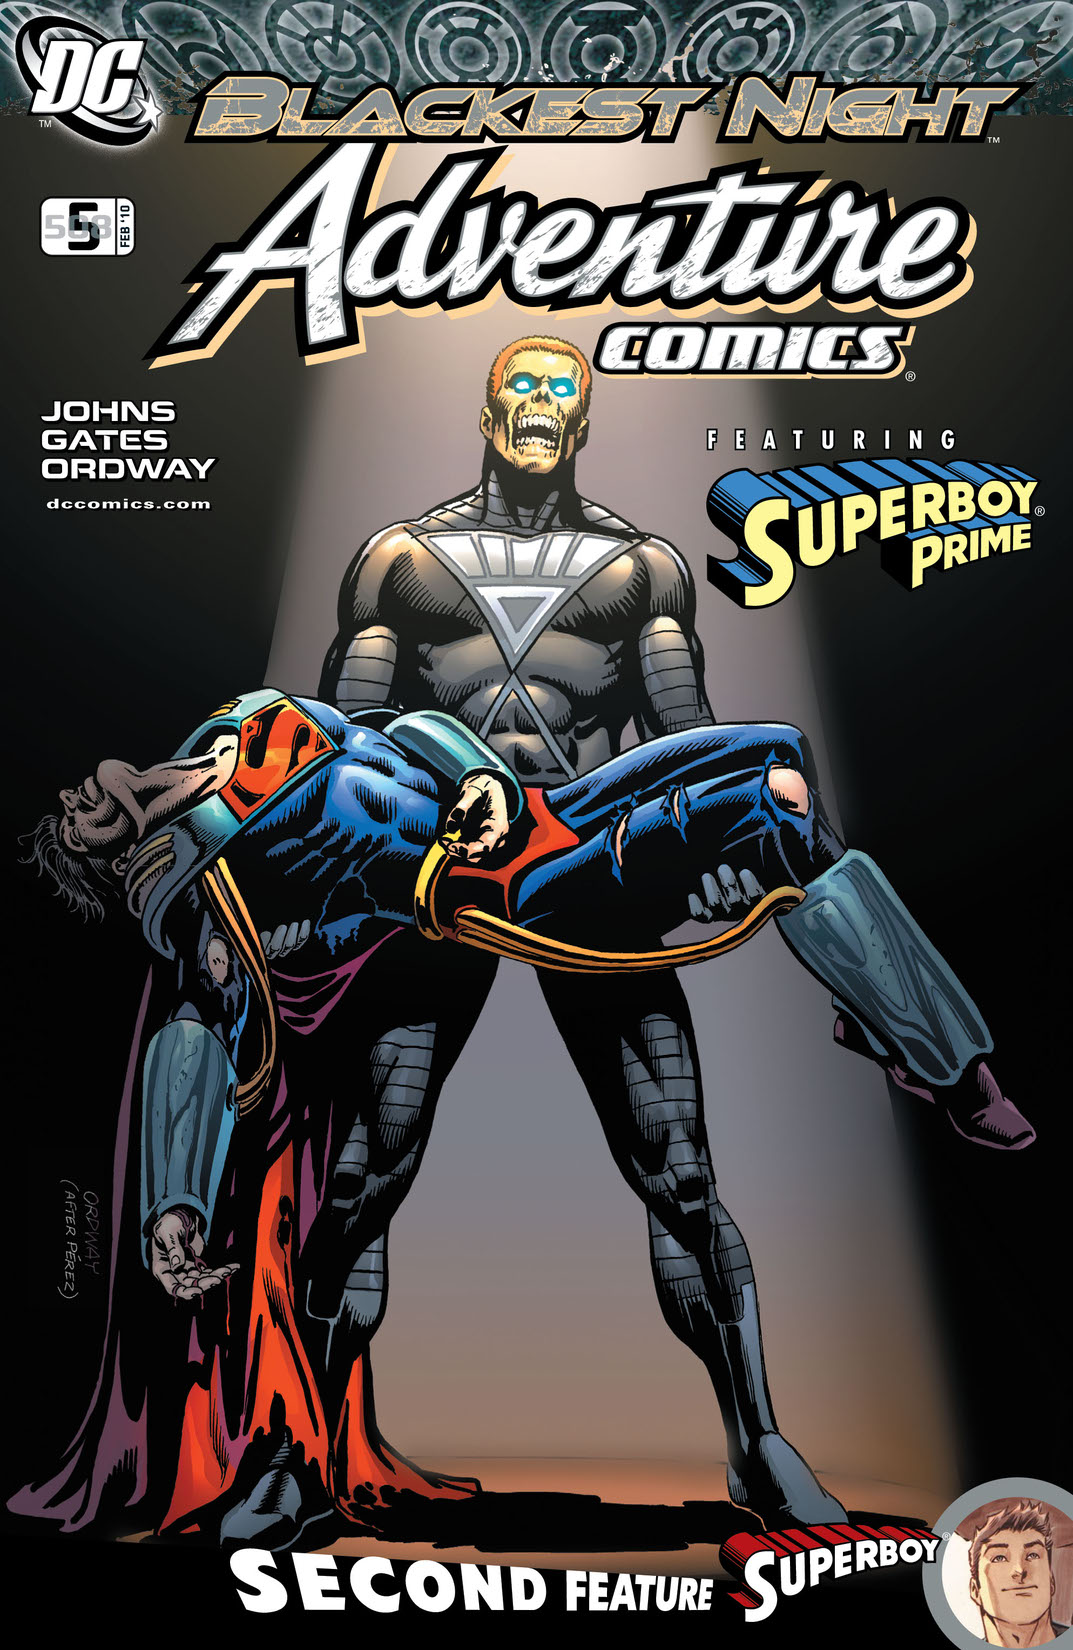 Adventure Comics (2009-) #5 preview images